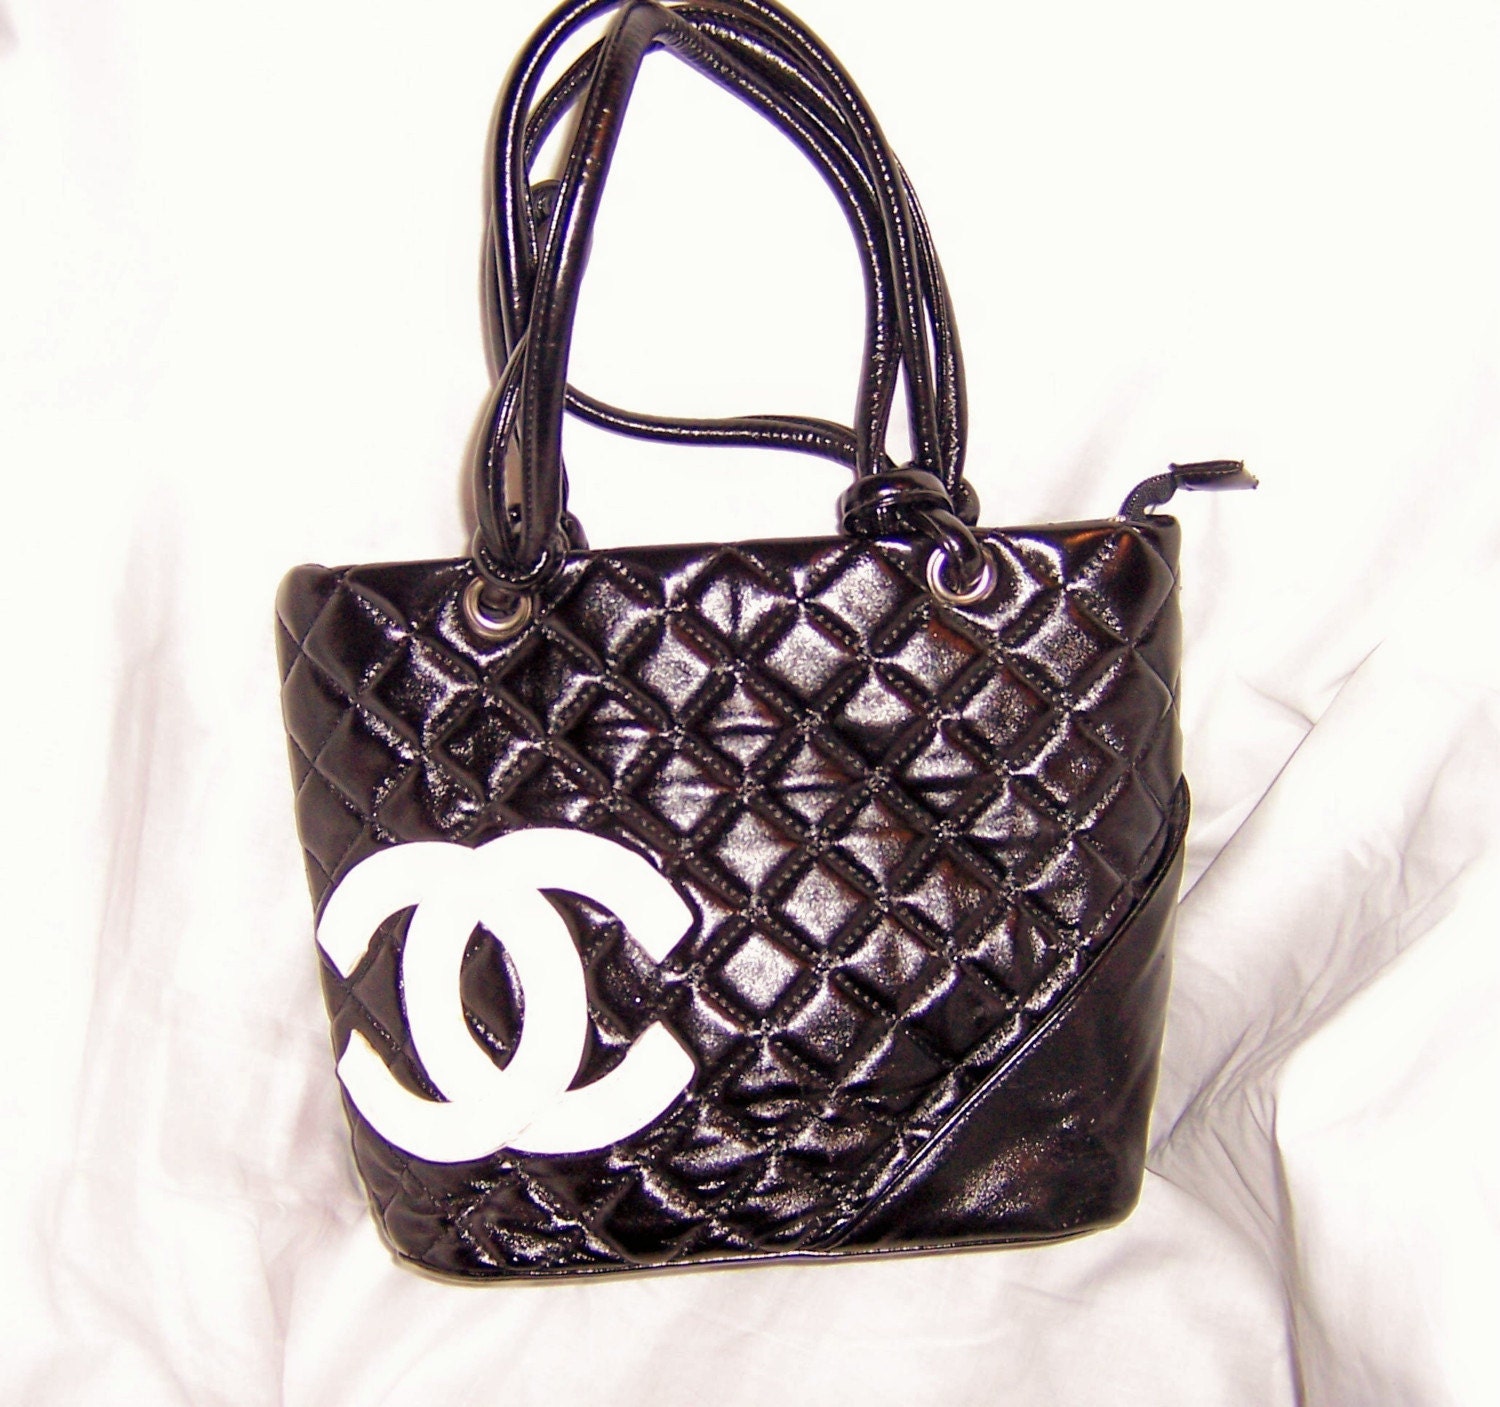 chanel designer handbags and purses chanel handbags are among the most ...